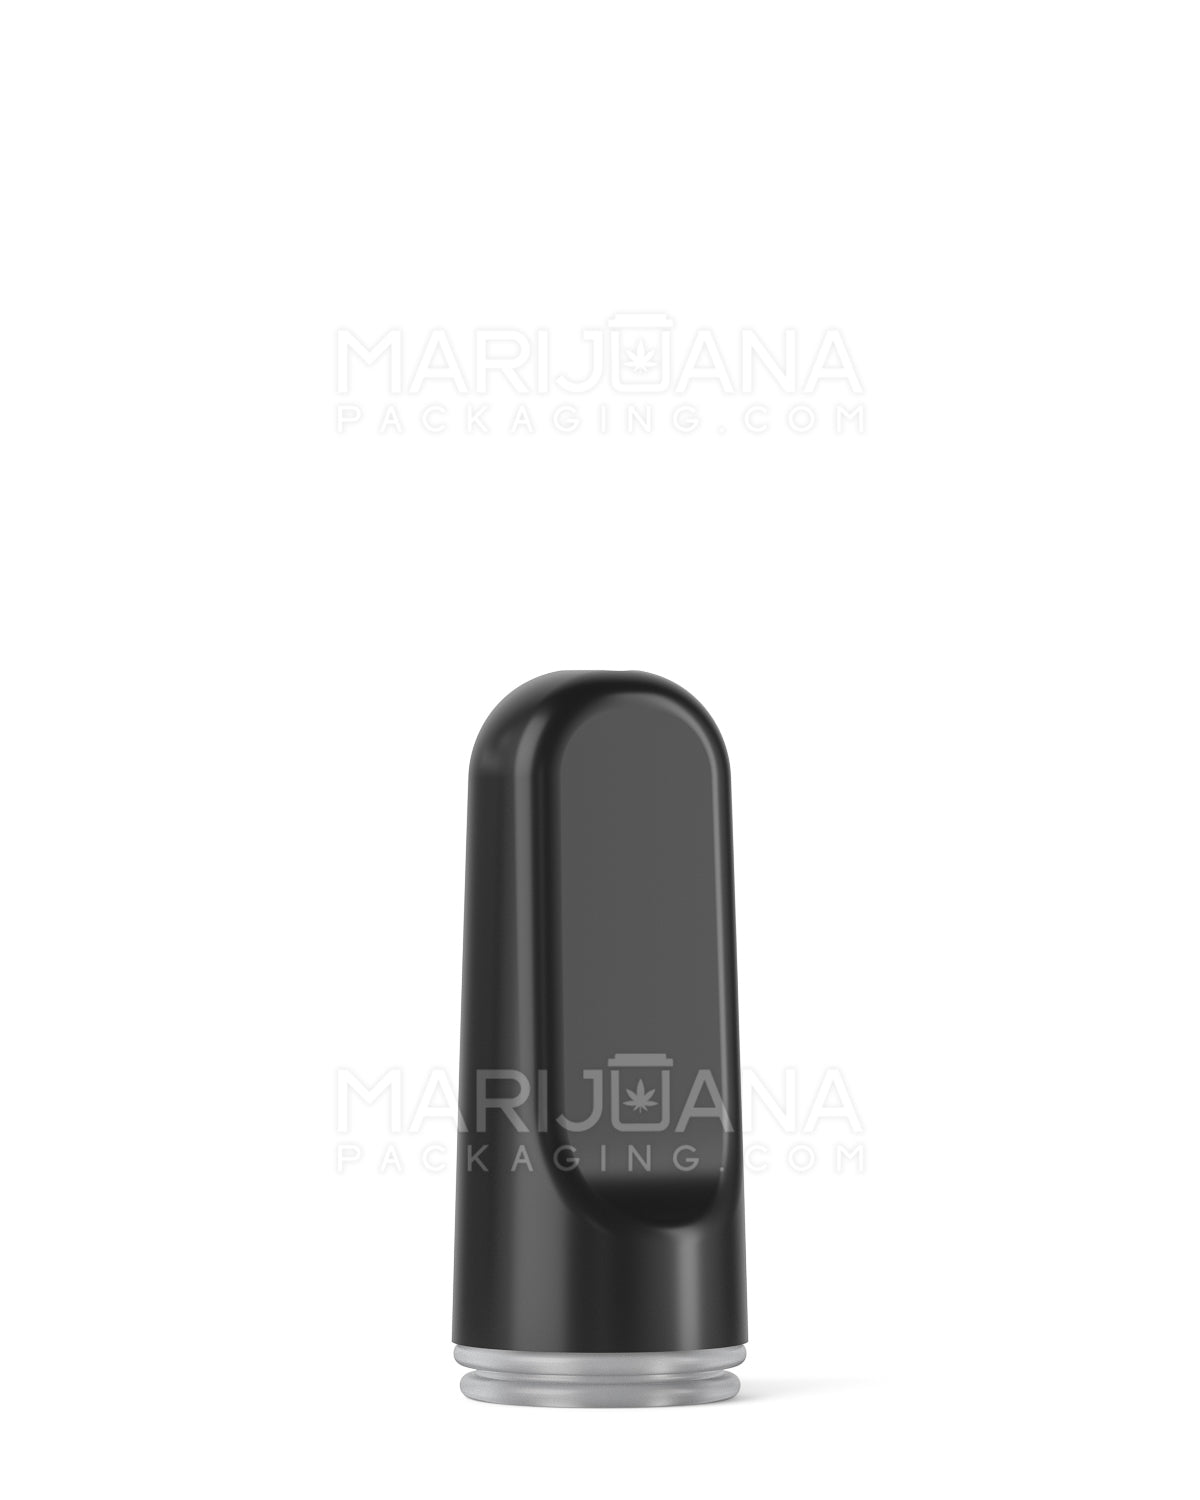 AVD | Flat Vape Mouthpiece for Glass Cartridges | Black Ceramic - Screw On - 600 Count - 2